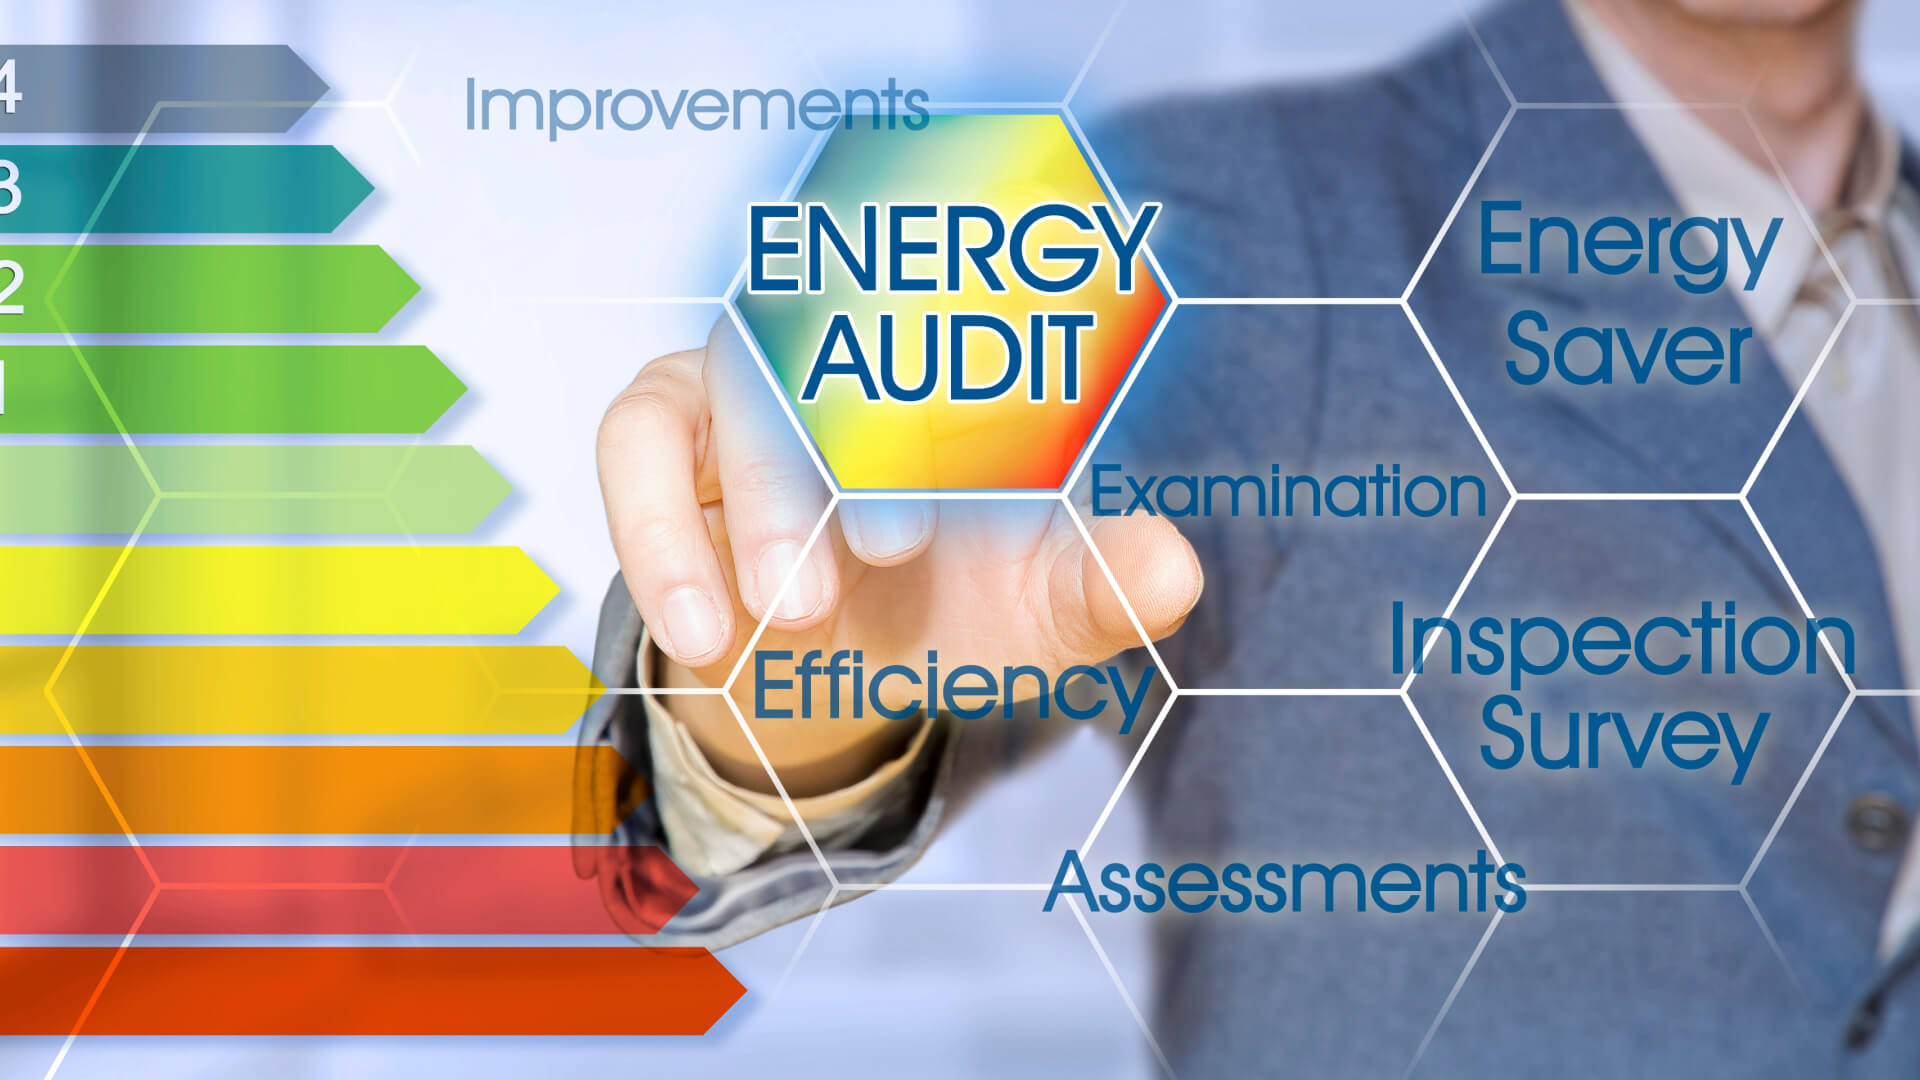 Energy Audits